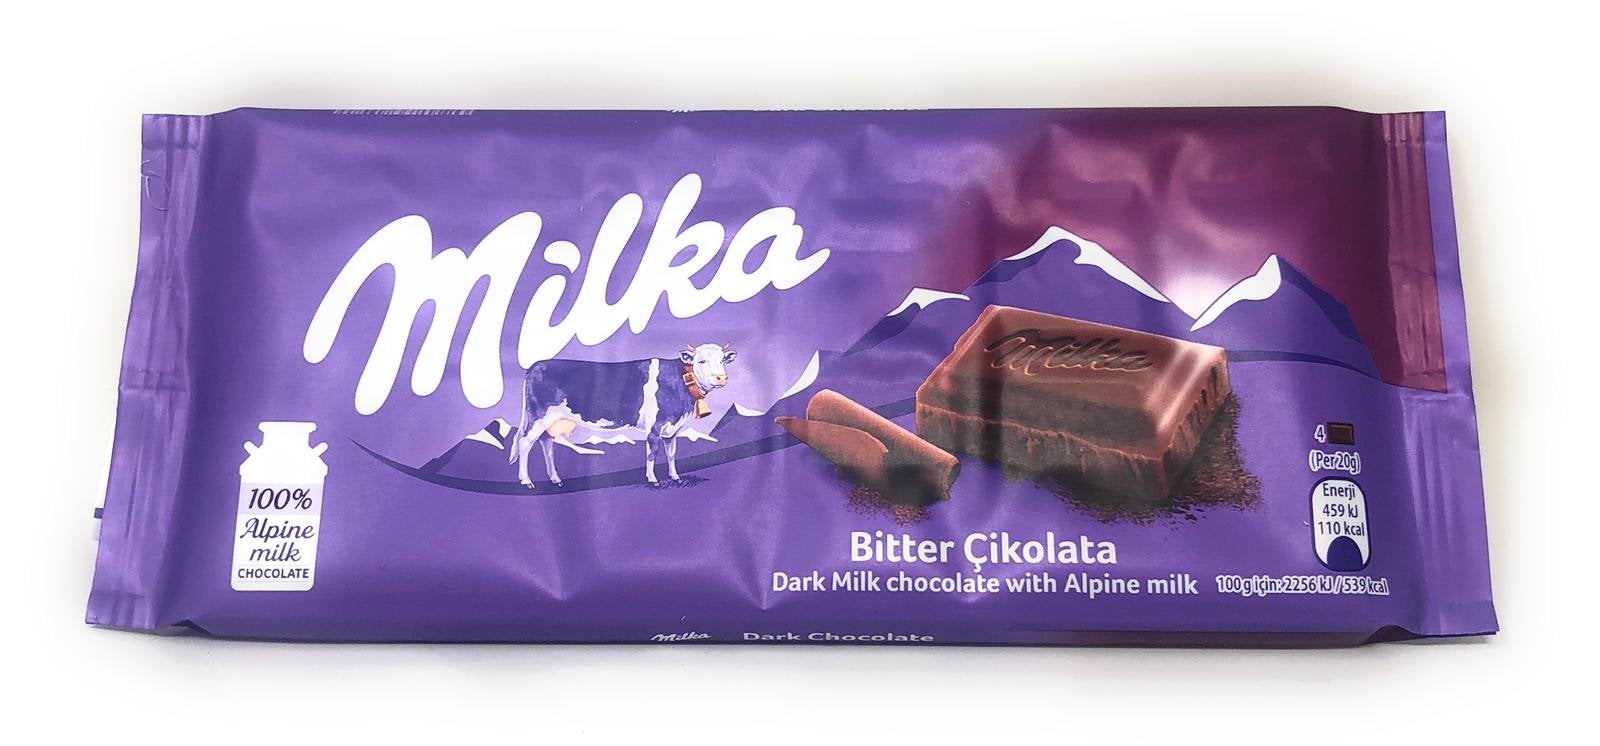 Milka Dark Chocolate